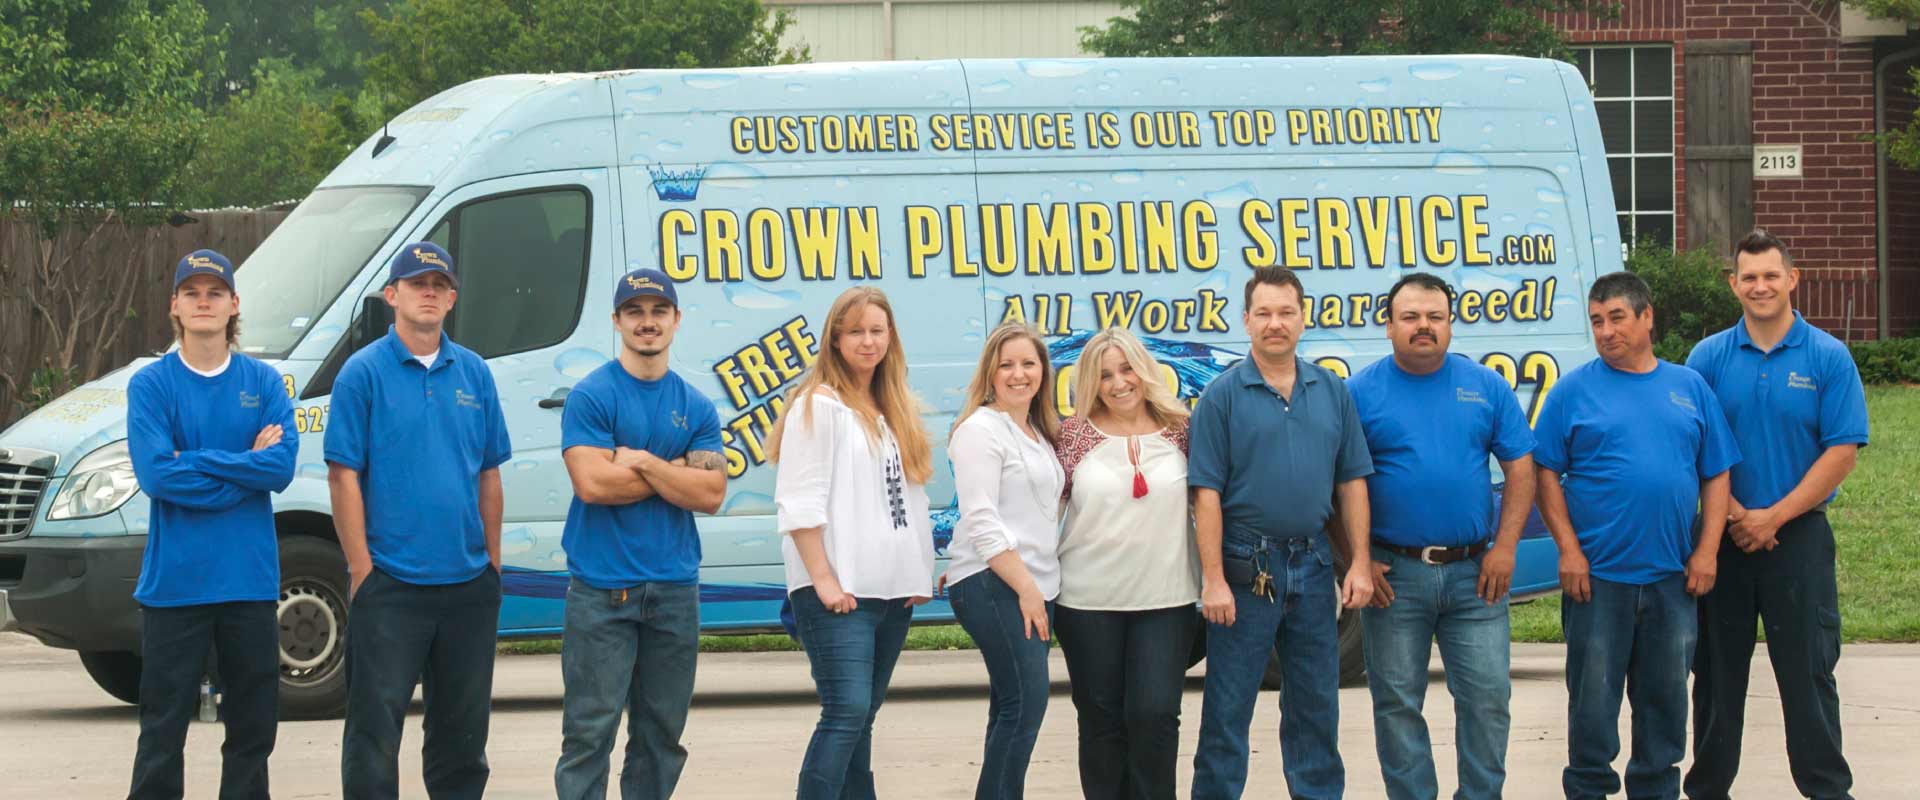 Crown Plumbing Service, Serving Prosper, Frisco and Mckinney, Texas